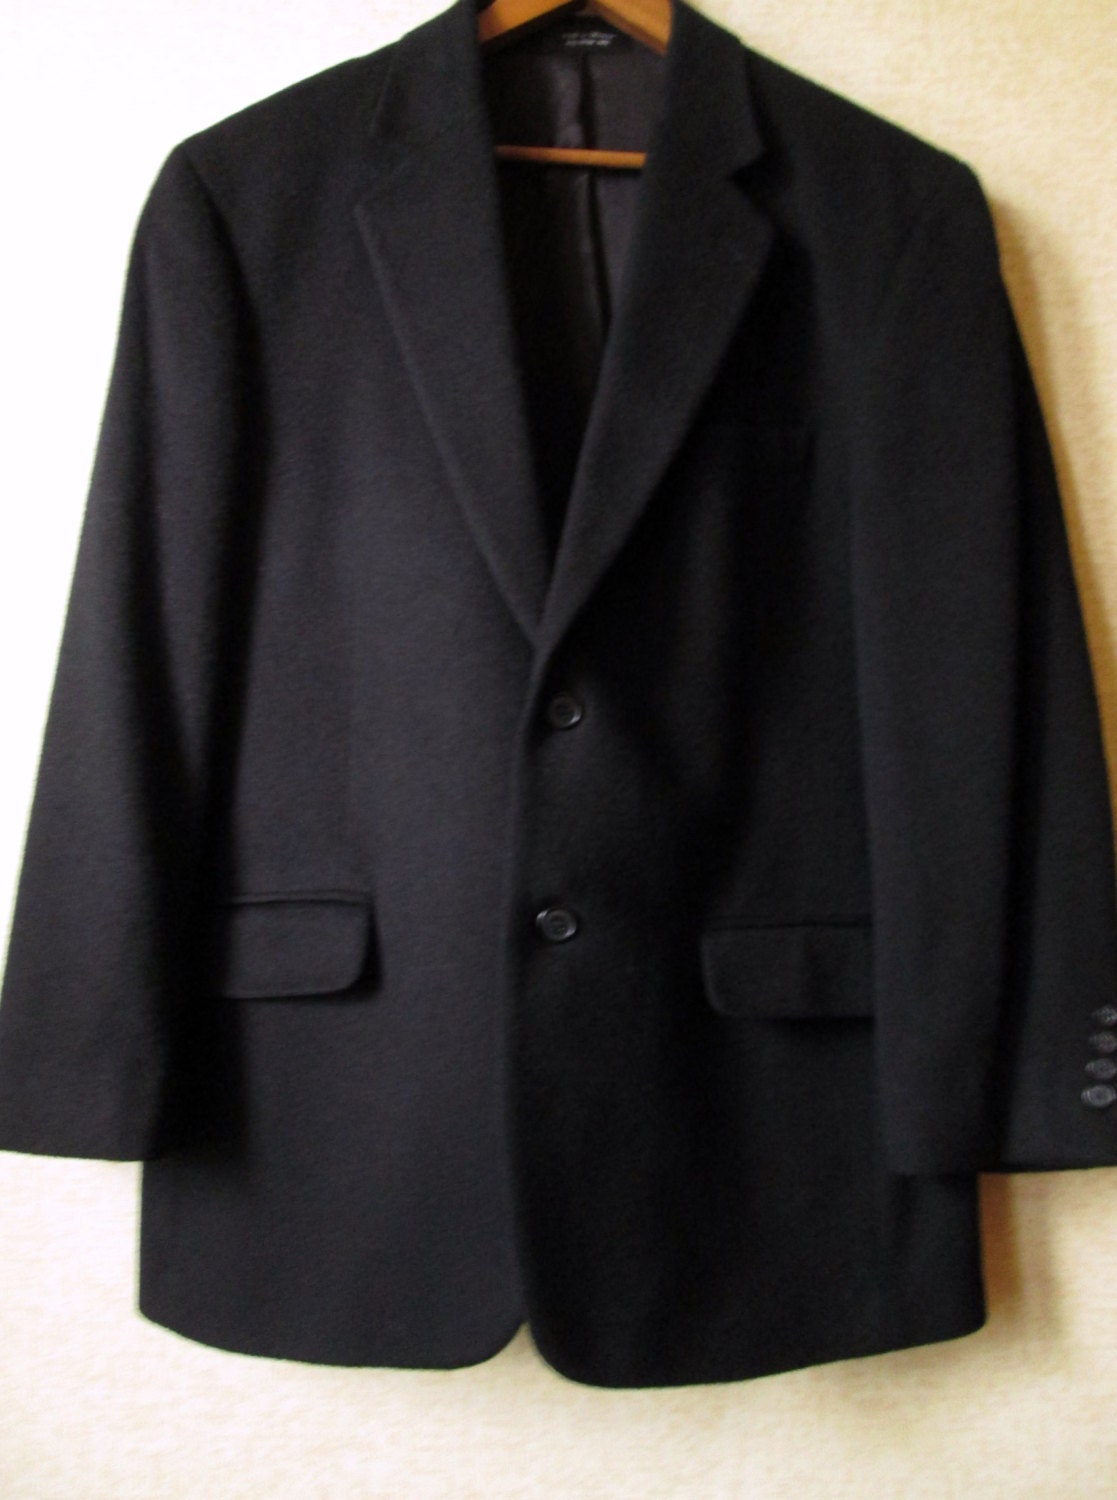 Black Wool Blazer camel hair sport jacket vintage by MySoftParade